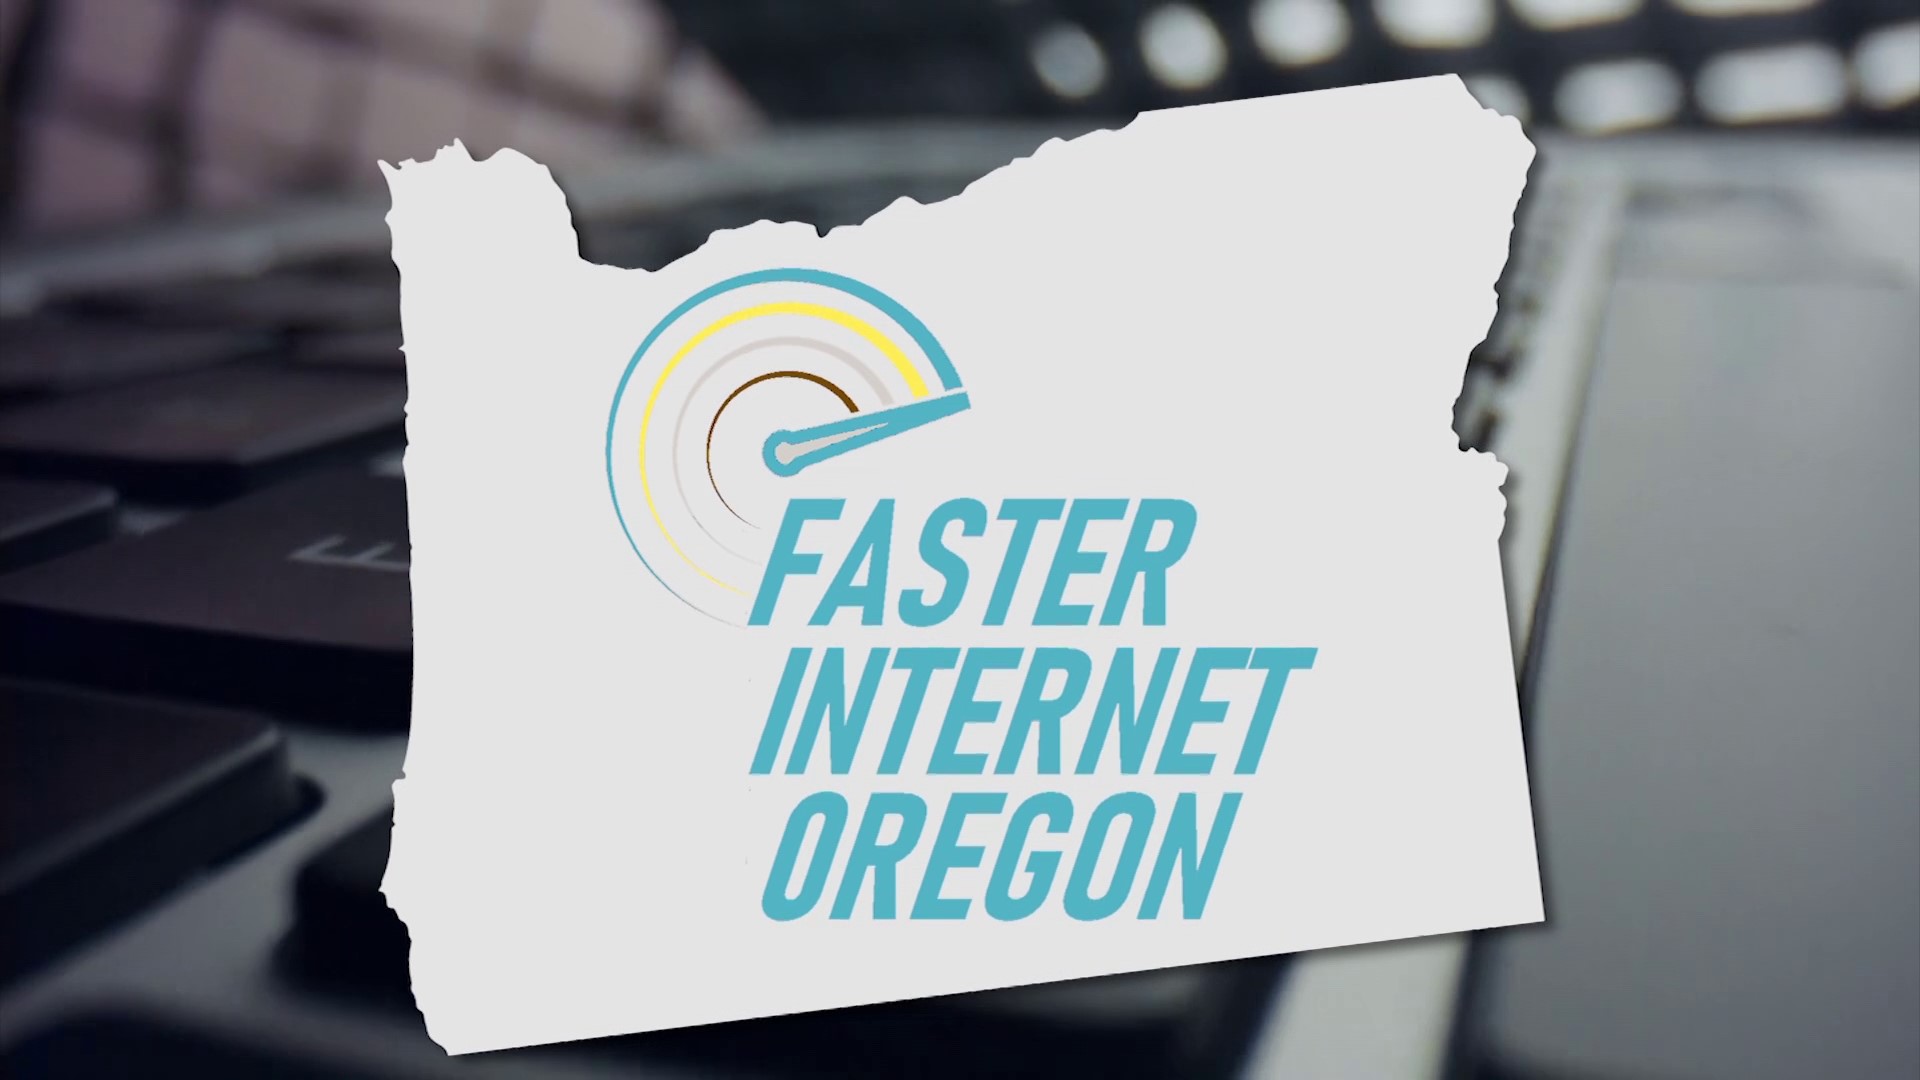 Information on helping Oregon upgrade internet speeds